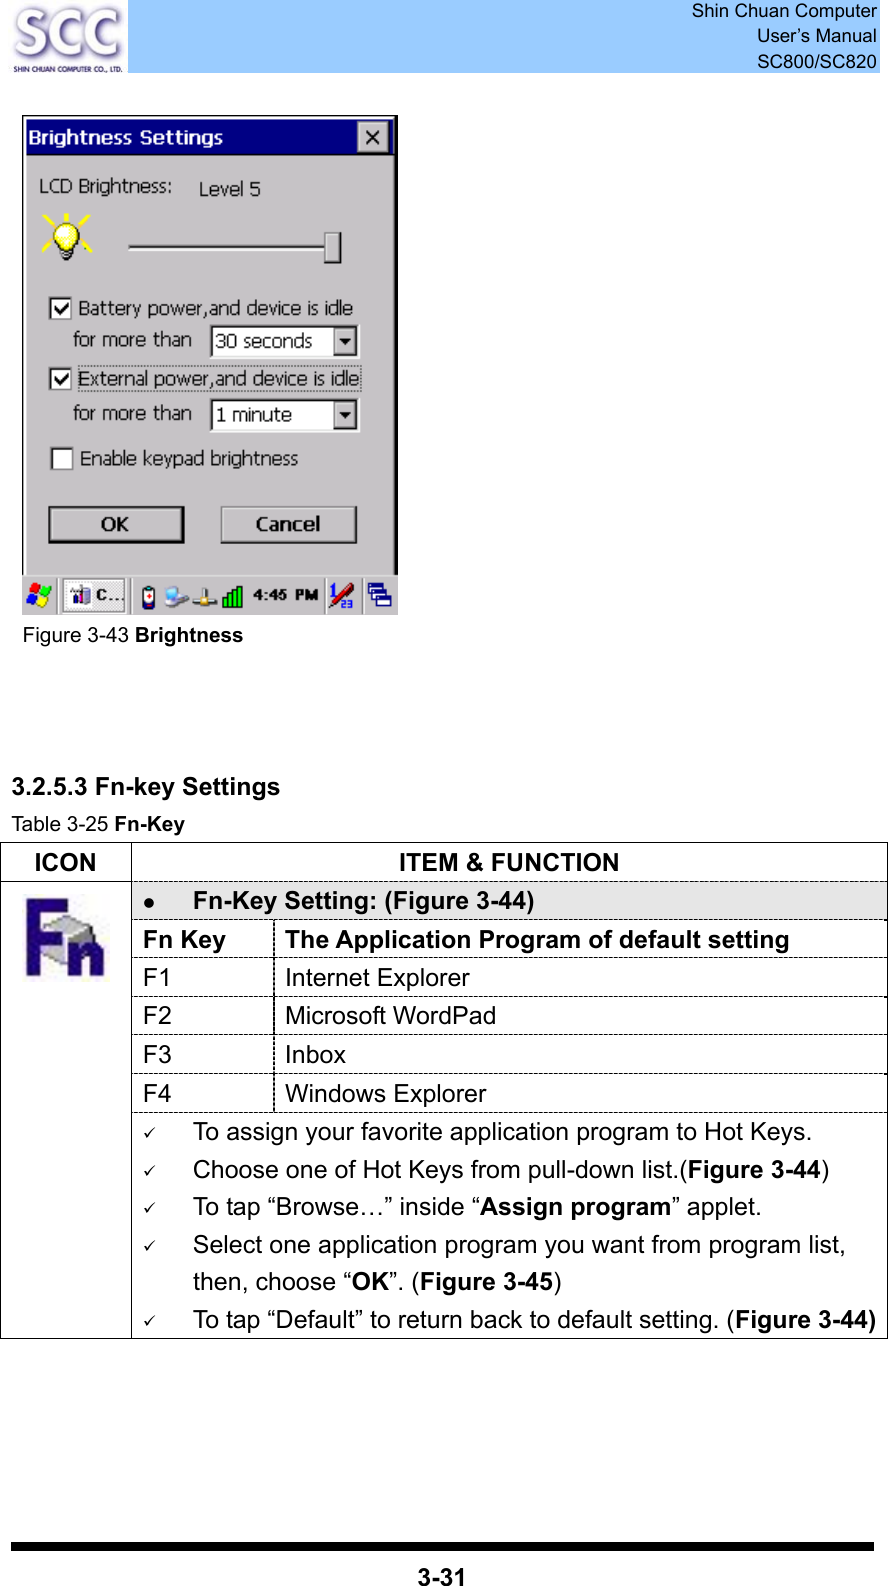  Shin Chuan Computer User’s Manual SC800/SC820  3-31     Figure 3-43 Brightness     3.2.5.3 Fn-key Settings Table 3-25 Fn-Key ICON  ITEM &amp; FUNCTION z Fn-Key Setting: (Figure 3-44) Fn Key  The Application Program of default setting F1 Internet Explorer F2 Microsoft WordPad F3 Inbox F4 Windows Explorer  9 To assign your favorite application program to Hot Keys. 9 Choose one of Hot Keys from pull-down list.(Figure 3-44) 9 To tap “Browse…” inside “Assign program” applet. 9 Select one application program you want from program list, then, choose “OK”. (Figure 3-45) 9 To tap “Default” to return back to default setting. (Figure 3-44)    